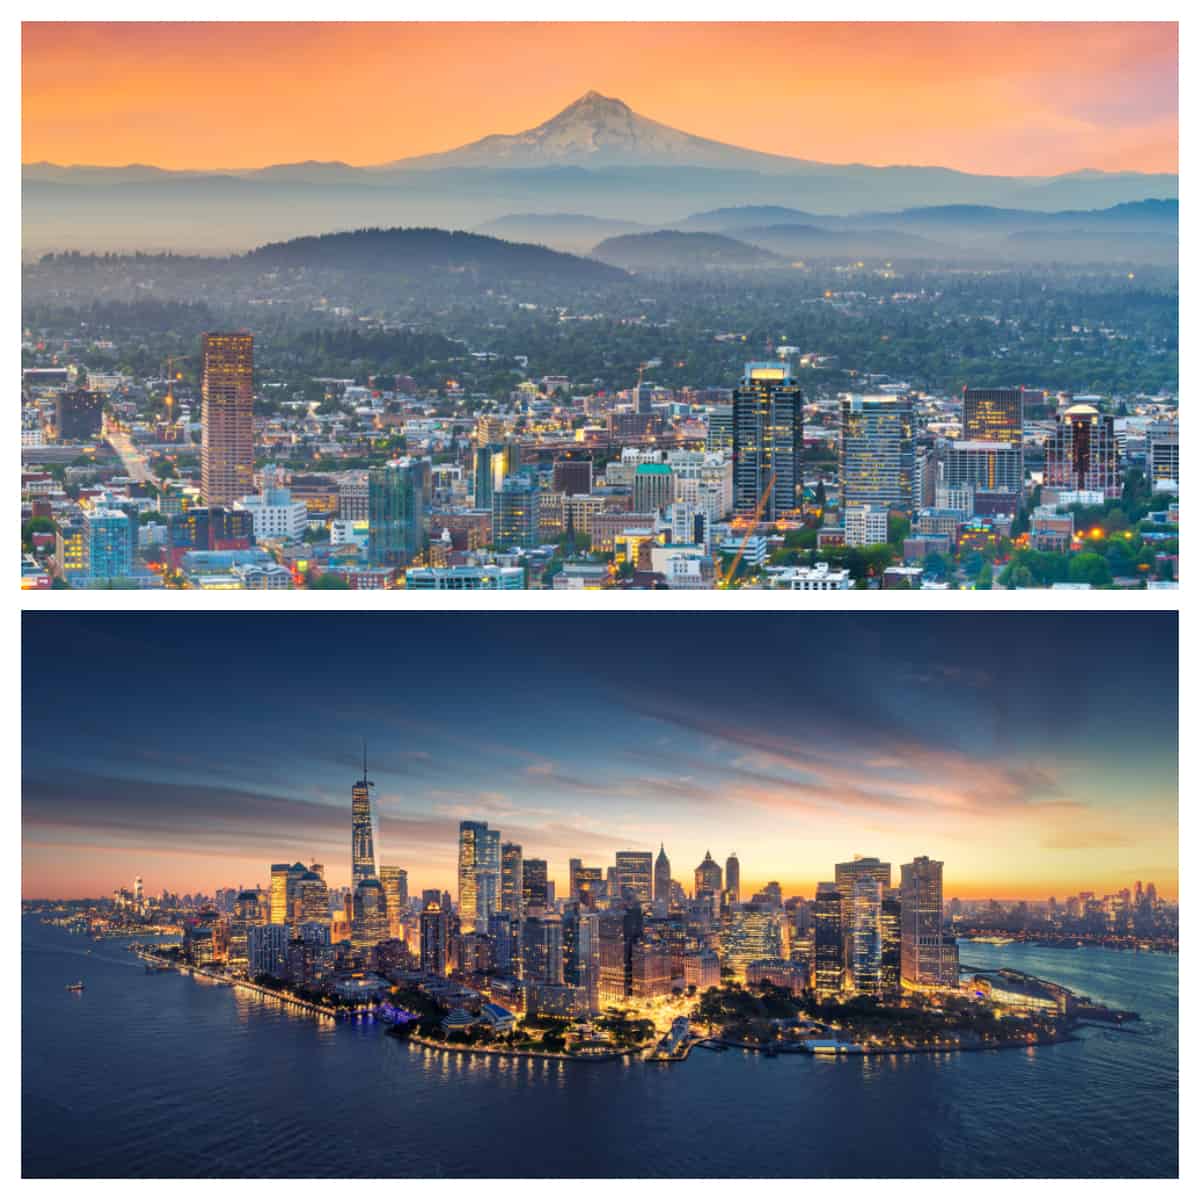 Portland vs. New York - A Living and Travel Comparison